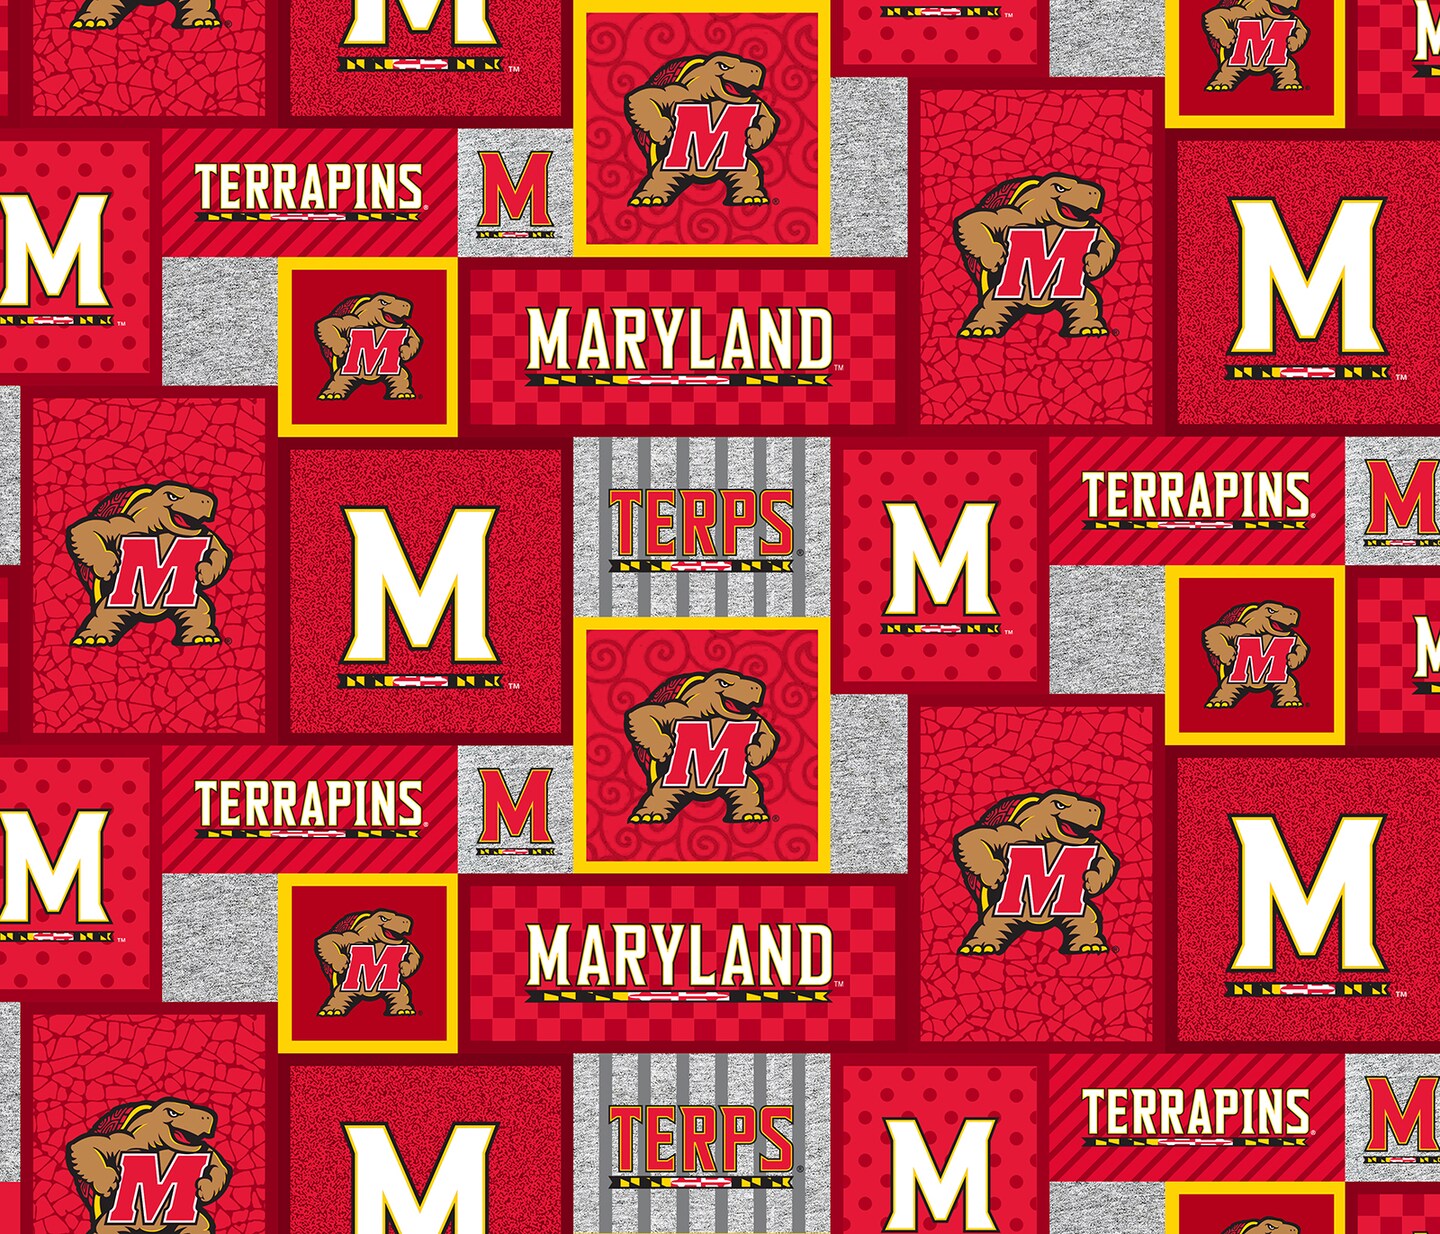 Sykel Enterprises-University of Maryland Fleece Fabric-Maryland Terps College Patch Fleece Blanket Fabric-Sold by the yard